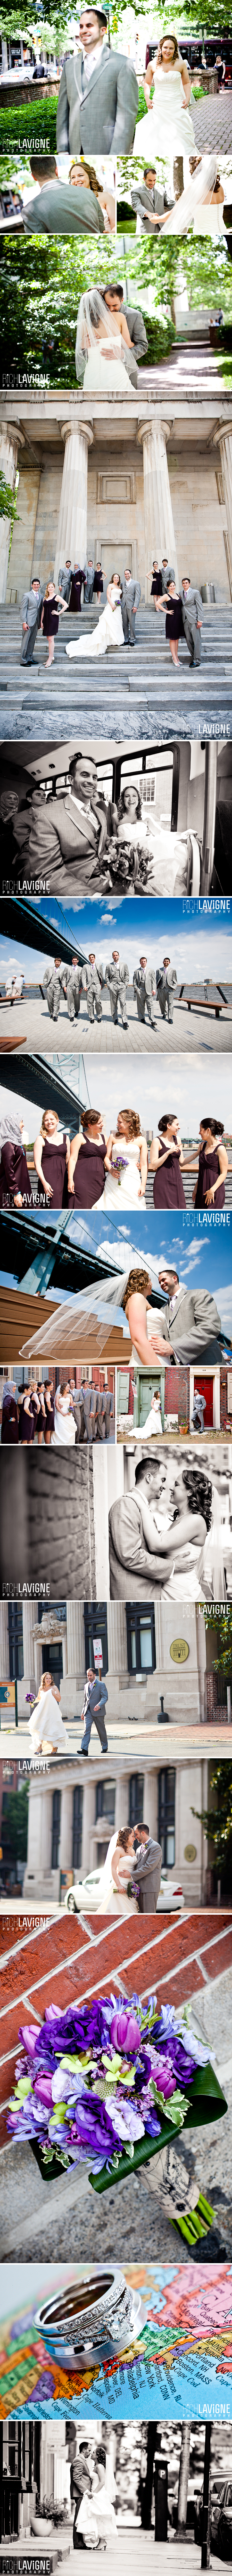 Race Street pier wedding photos